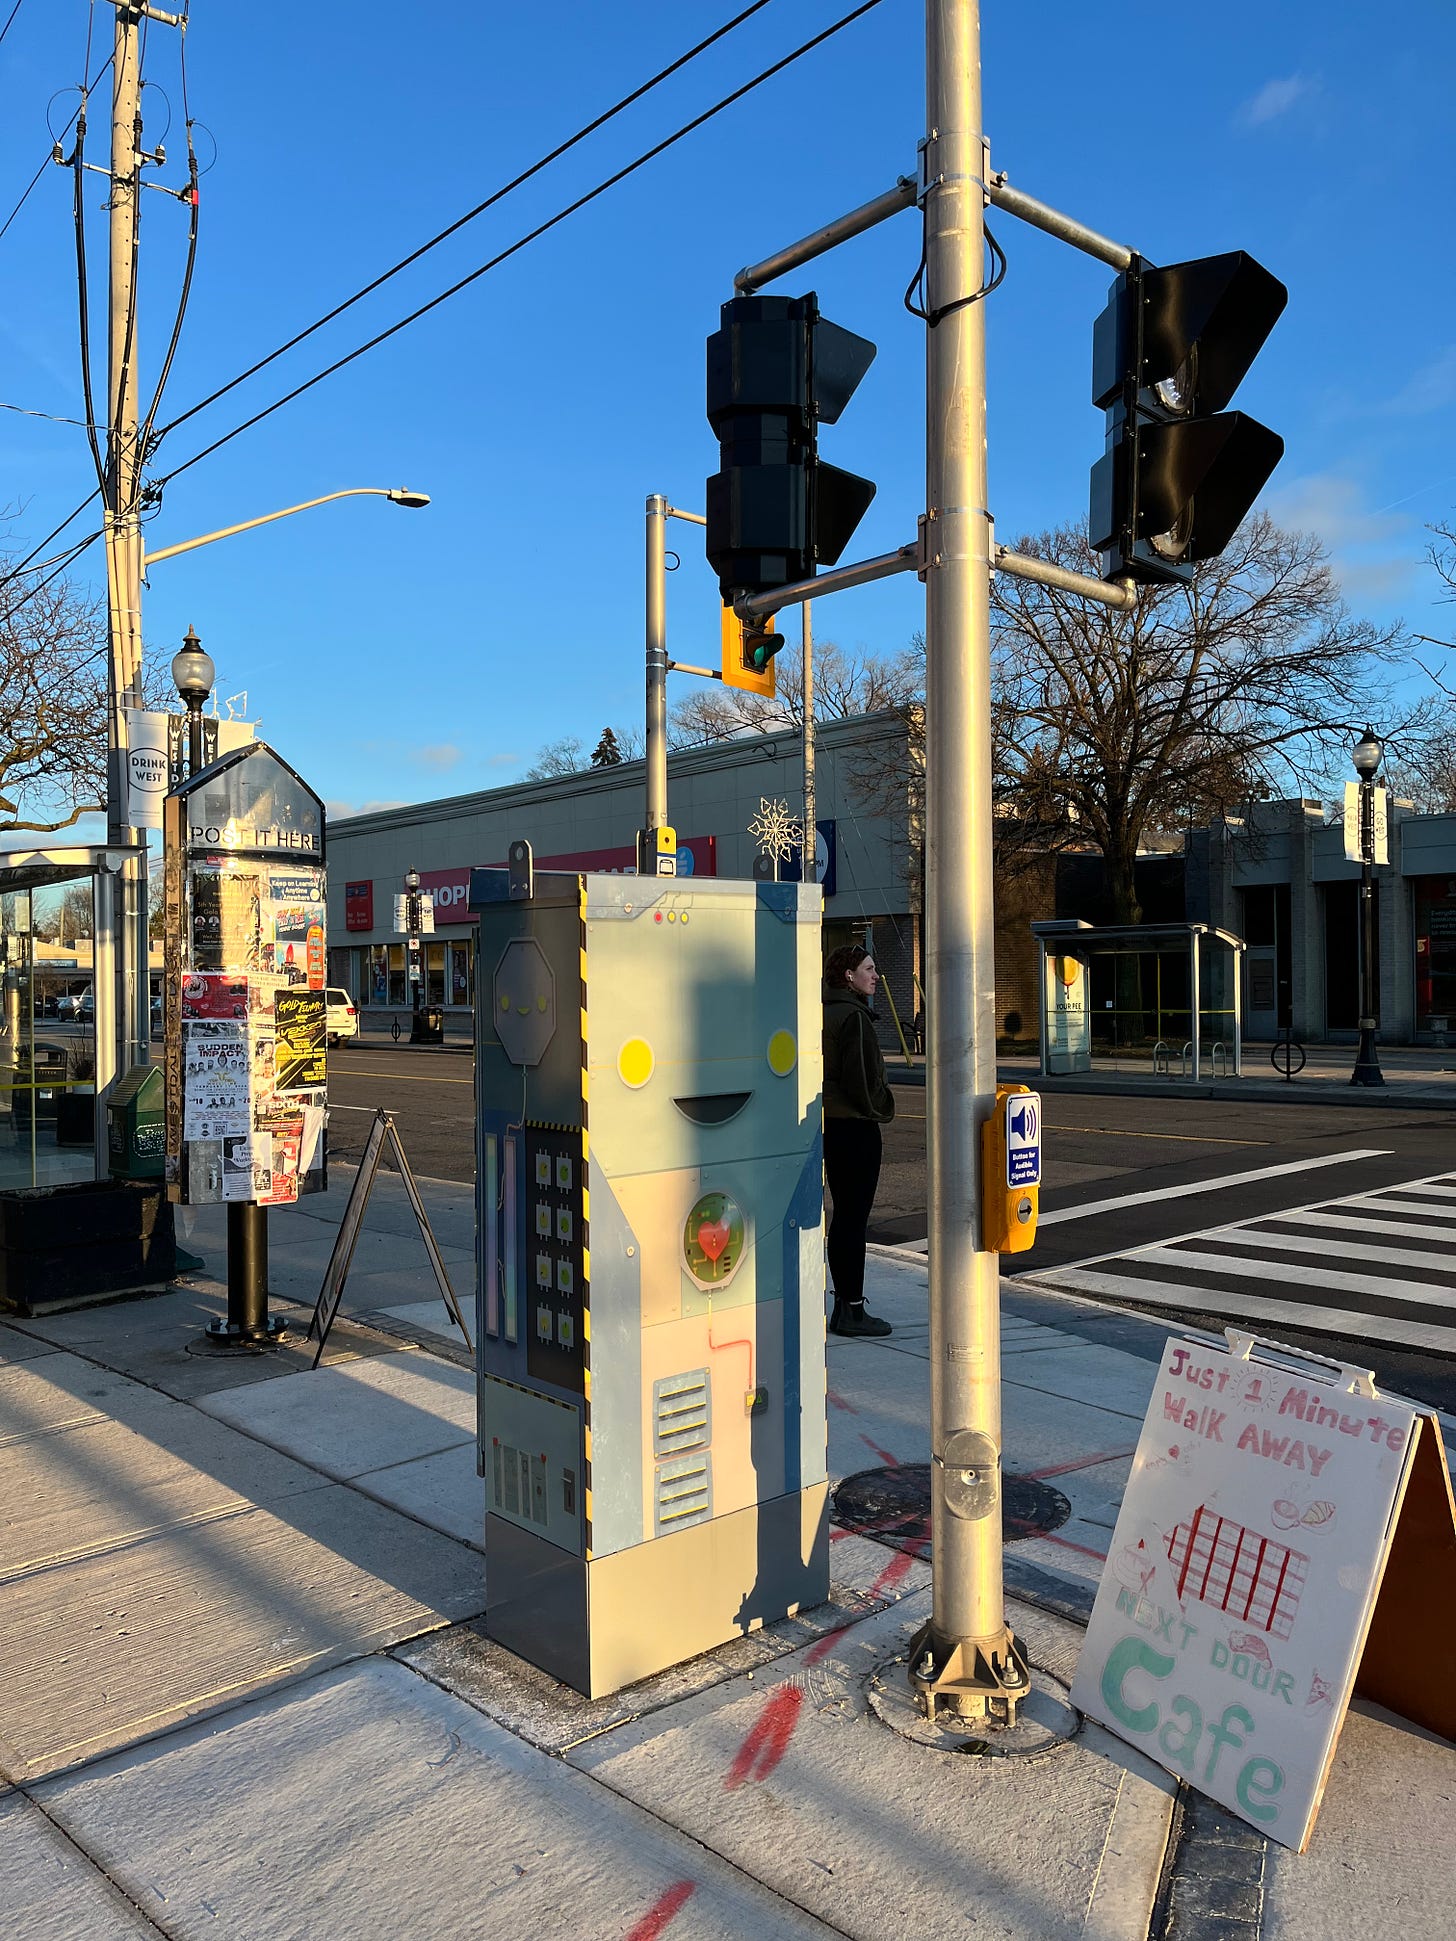 Traffic Signal Cabinet on the street corner in sunset lighting.